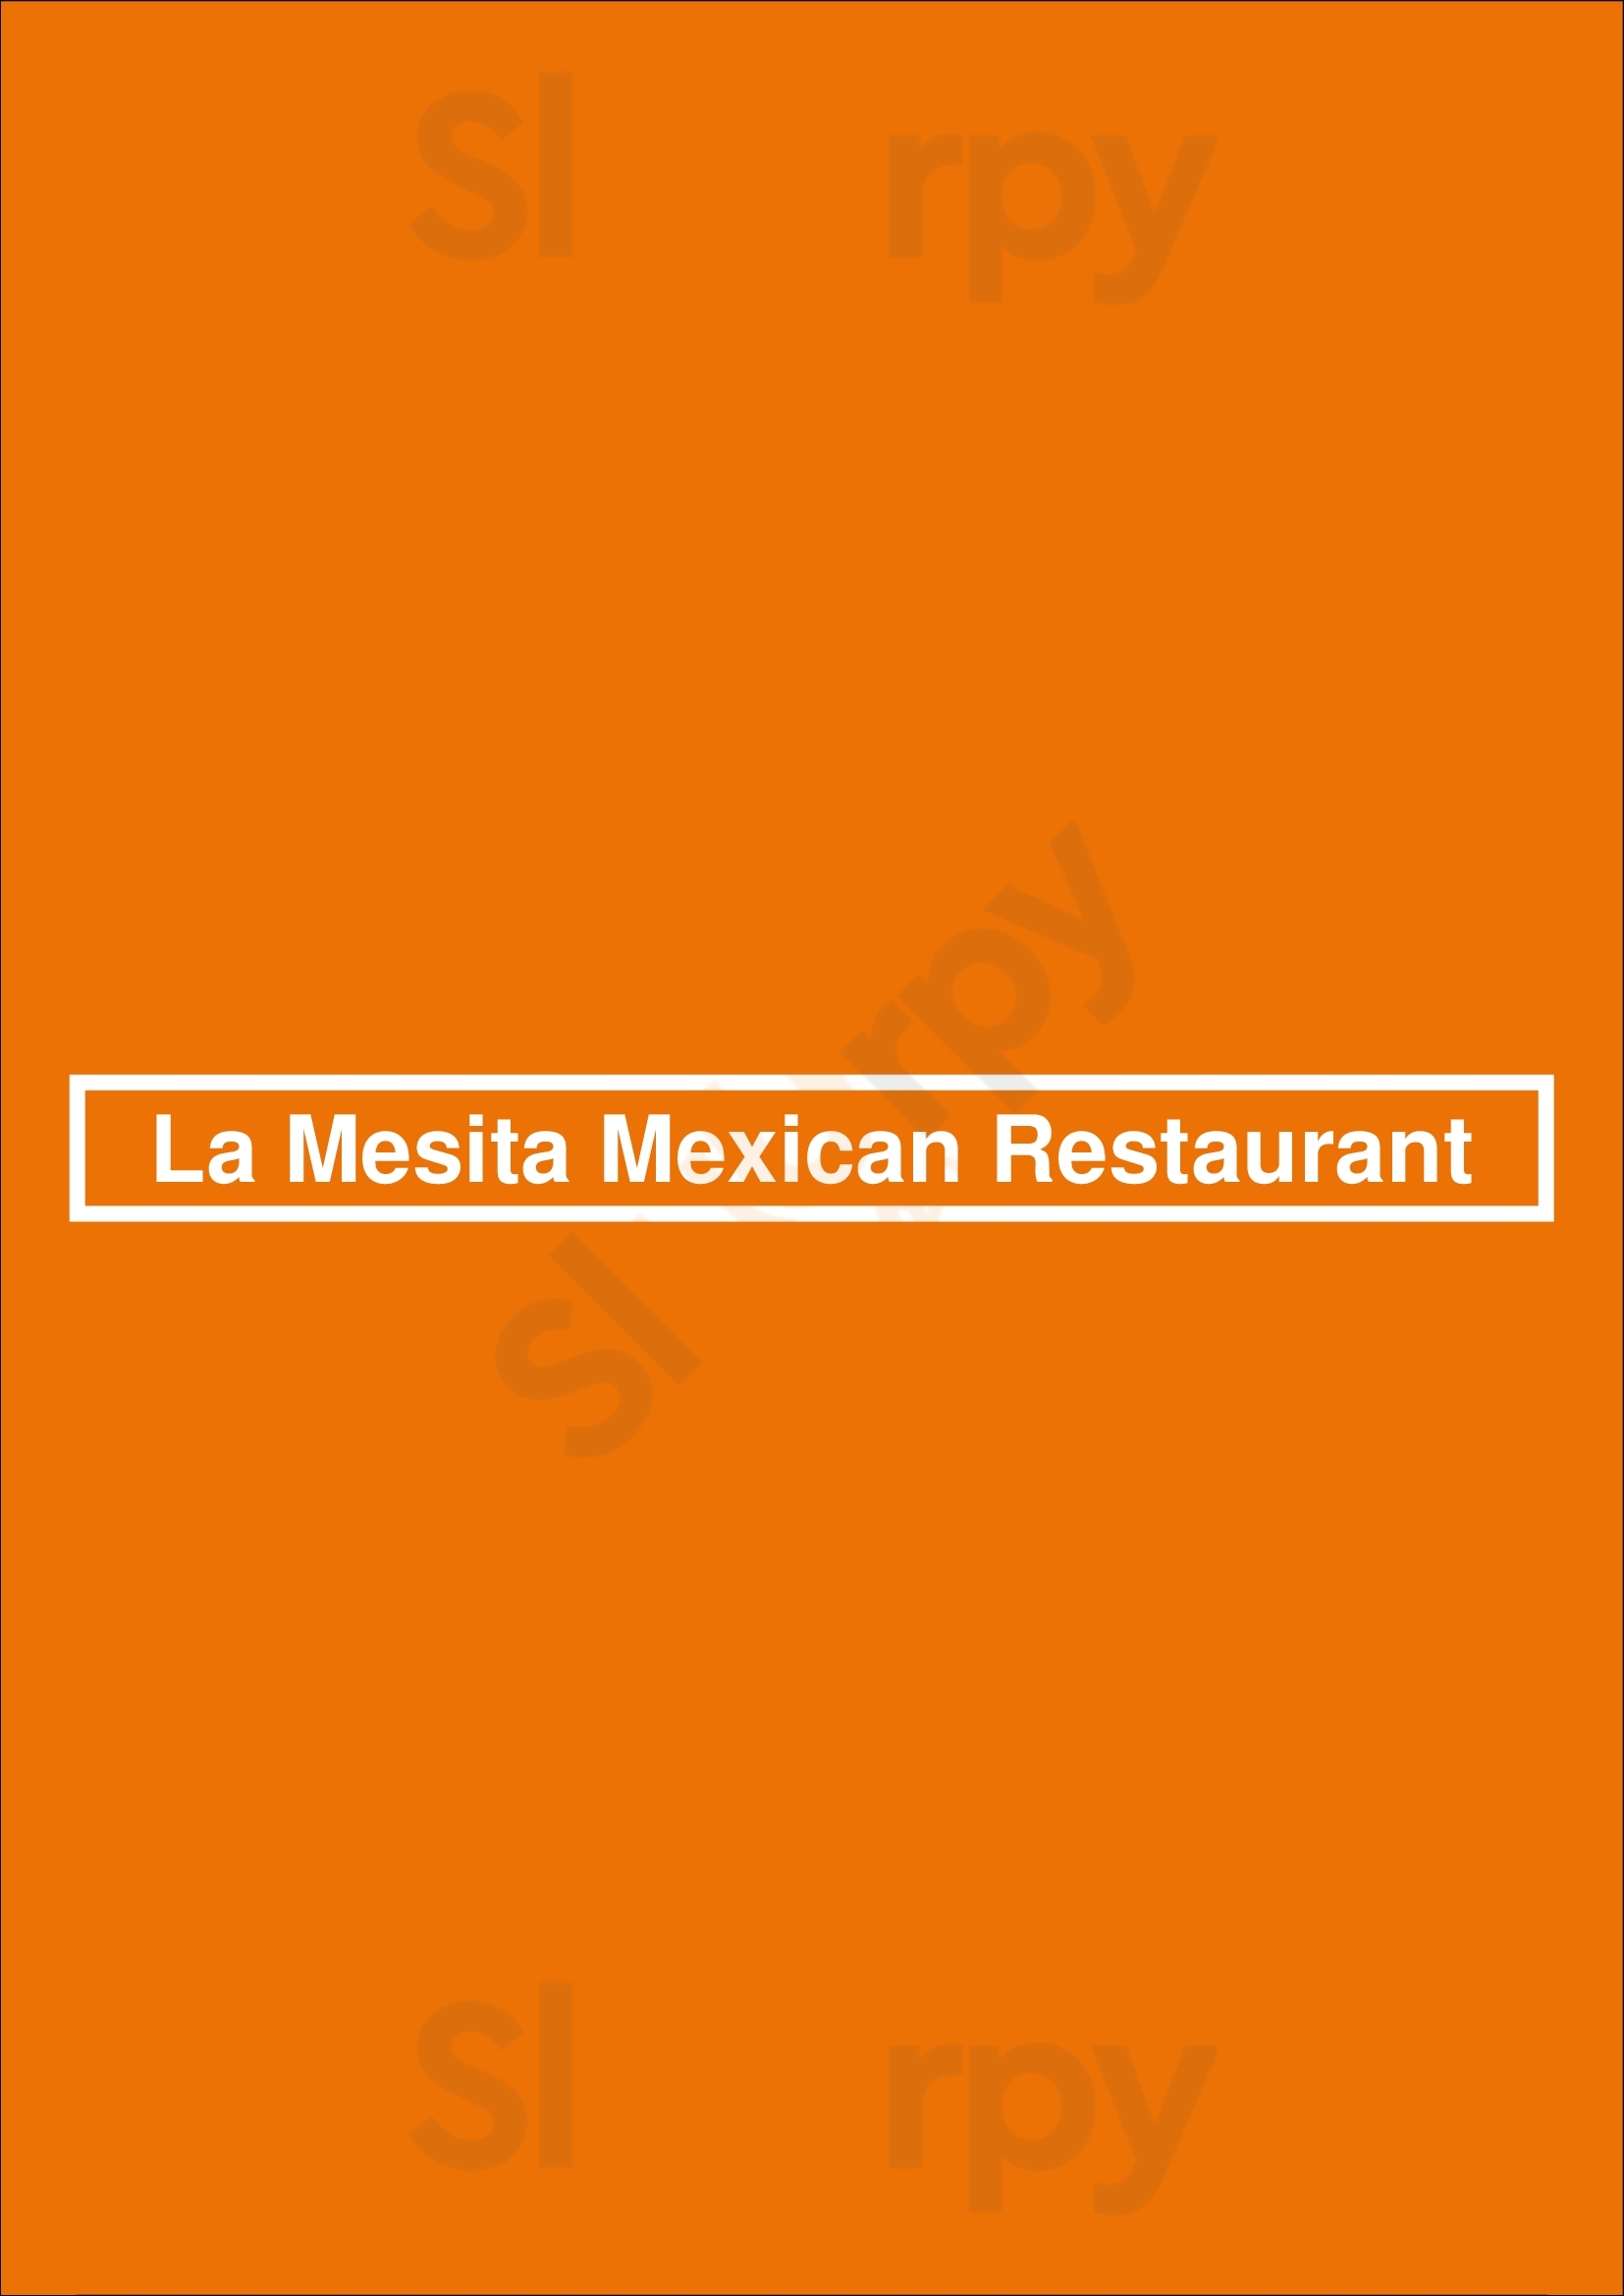 La Mesita Mexican Restaurant Peterborough Menu - 1